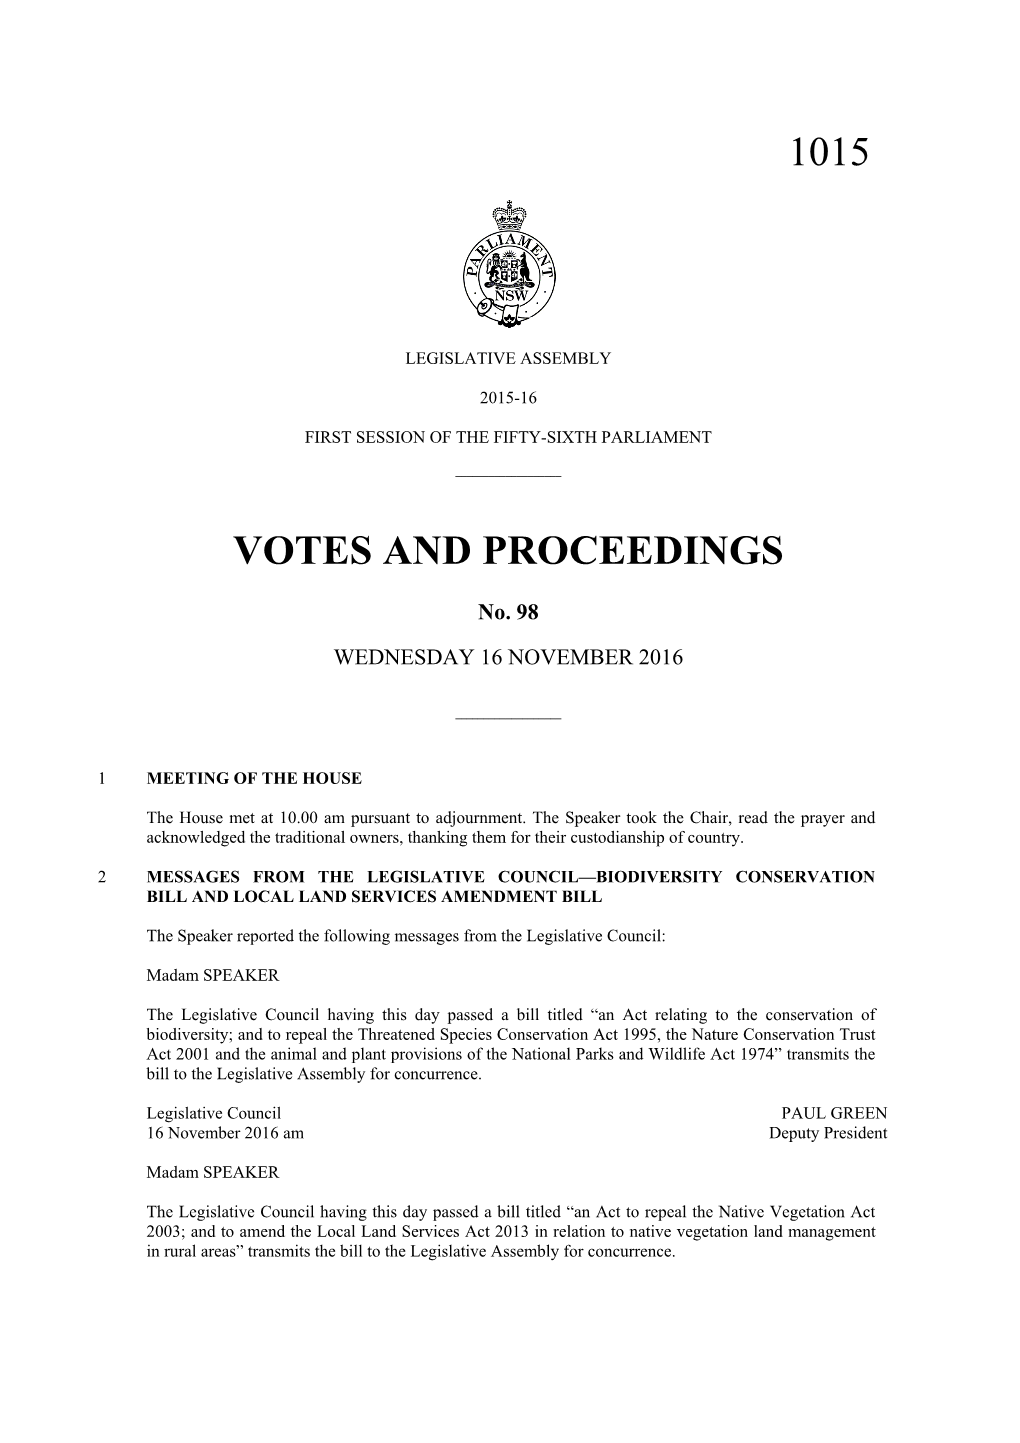 1015 Votes and Proceedings